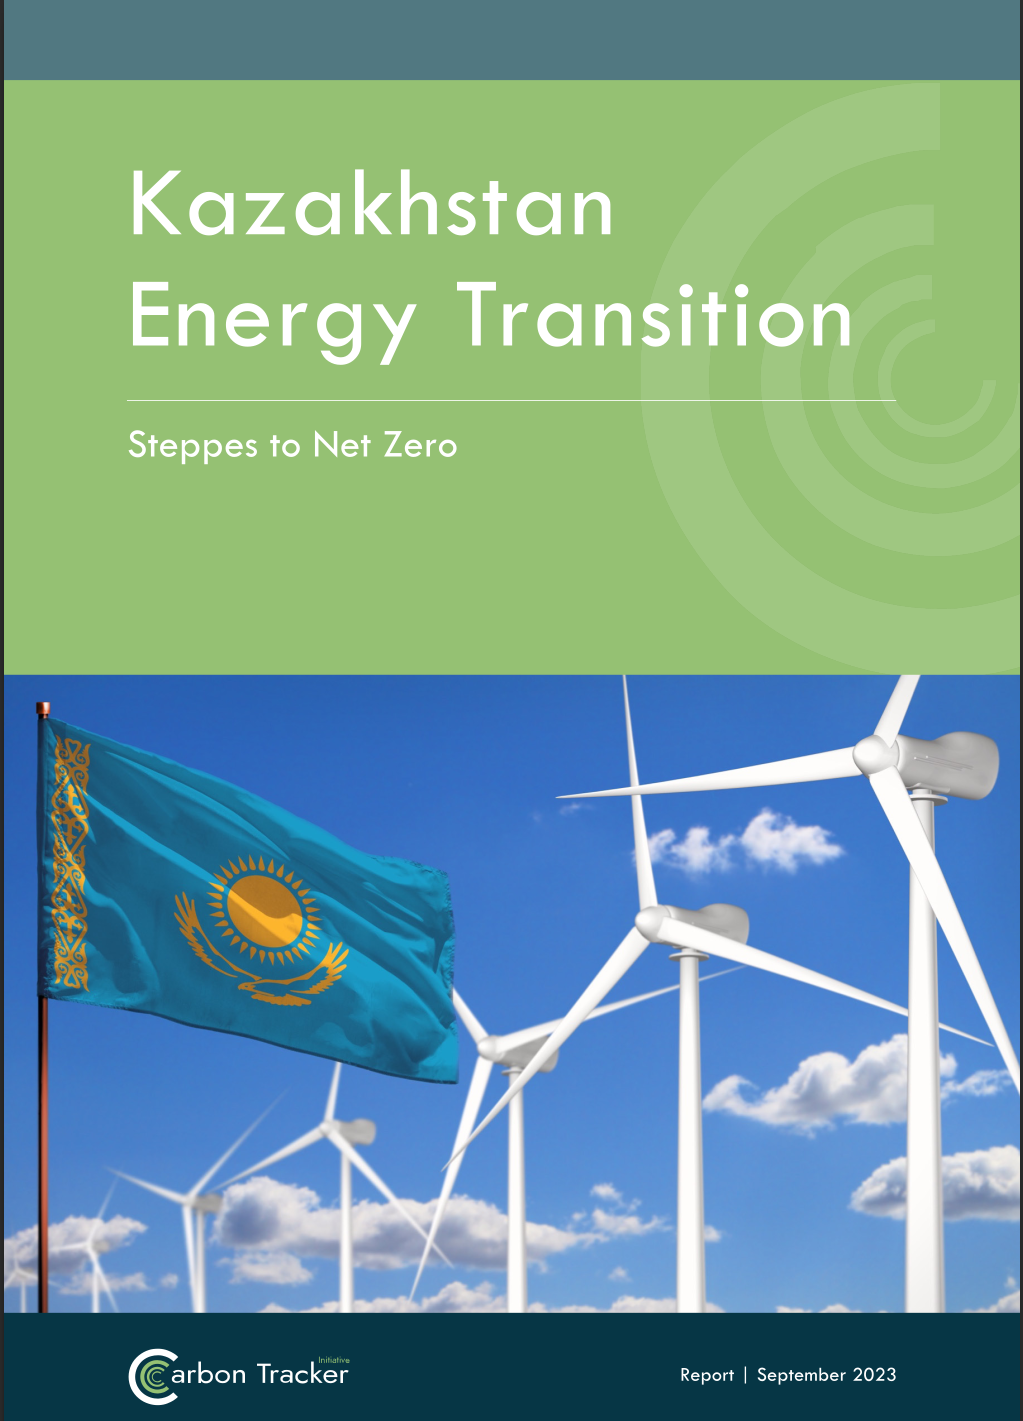 Kazakhstan Energy Transition​​​​‌﻿‍﻿​‍​‍‌‍﻿﻿‌﻿​‍‌‍‍‌‌‍‌﻿‌‍‍‌‌‍﻿‍​‍​‍​﻿‍‍​‍​‍‌﻿​﻿‌‍​‌‌‍﻿‍‌‍‍‌‌﻿‌​‌﻿‍‌​‍﻿‍‌‍‍‌‌‍﻿﻿​‍​‍​‍﻿​​‍​‍‌‍‍​‌﻿​‍‌‍‌‌‌‍‌‍​‍​‍​﻿‍‍​‍​‍​‍﻿﻿‌﻿​﻿‌﻿‌​‌﻿‌‌‌‍‌​‌‍‍‌‌‍﻿﻿​‍﻿﻿‌‍‍‌‌‍﻿‍‌﻿‌​‌‍‌‌‌‍﻿‍‌﻿‌​​‍﻿﻿‌‍‌‌‌‍‌​‌‍‍‌‌﻿‌​​‍﻿﻿‌‍﻿‌‌‍﻿﻿‌‍‌​‌‍‌‌​﻿﻿‌‌﻿​​‌﻿​‍‌‍‌‌‌﻿​﻿‌‍‌‌‌‍﻿‍‌﻿‌​‌‍​‌‌﻿‌​‌‍‍‌‌‍﻿﻿‌‍﻿‍​﻿‍﻿‌‍‍‌‌‍‌​​﻿﻿‌‌‍‌​​﻿‍‌​﻿‌​​﻿‌﻿​﻿‌﻿​﻿​﻿‌‍‌‌​﻿‌‌​‍﻿‌​﻿​﻿​﻿‌‍​﻿‌‍​﻿​‌​‍﻿‌​﻿‌​‌‍‌​​﻿​﻿​﻿‌‌​‍﻿‌‌‍​‍‌‍‌‍​﻿​​​﻿‍‌​‍﻿‌​﻿​‍‌‍​‌​﻿​‌​﻿‌‌​﻿​‌​﻿‍​​﻿​﻿​﻿‌‍​﻿​﻿​﻿‌​​﻿‌‌‌‍‌​​﻿‍﻿‌﻿‌​‌﻿‍‌‌﻿​​‌‍‌‌​﻿﻿‌‌﻿​‍‌‍‌‌‌﻿​​‌‍﻿﻿‌﻿​‍‌﻿‌​​﻿‍﻿‌﻿​​‌‍​‌‌﻿‌​‌‍‍​​﻿﻿‌‌﻿‌​‌‍‍‌‌﻿‌​‌‍﻿​‌‍‌‌​﻿﻿﻿‌‍​‍‌‍​‌‌﻿​﻿‌‍‌‌‌‌‌‌‌﻿​‍‌‍﻿​​﻿﻿‌​‍‌‌​﻿​‍‌​‌‍‌﻿​﻿‌﻿‌​‌﻿‌‌‌‍‌​‌‍‍‌‌‍﻿﻿​‍‌‍‌‍‍‌‌‍‌​​﻿﻿‌‌‍‌​​﻿‍‌​﻿‌​​﻿‌﻿​﻿‌﻿​﻿​﻿‌‍‌‌​﻿‌‌​‍﻿‌​﻿​﻿​﻿‌‍​﻿‌‍​﻿​‌​‍﻿‌​﻿‌​‌‍‌​​﻿​﻿​﻿‌‌​‍﻿‌‌‍​‍‌‍‌‍​﻿​​​﻿‍‌​‍﻿‌​﻿​‍‌‍​‌​﻿​‌​﻿‌‌​﻿​‌​﻿‍​​﻿​﻿​﻿‌‍​﻿​﻿​﻿‌​​﻿‌‌‌‍‌​​‍‌‍‌﻿‌​‌﻿‍‌‌﻿​​‌‍‌‌​﻿﻿‌‌﻿​‍‌‍‌‌‌﻿​​‌‍﻿﻿‌﻿​‍‌﻿‌​​‍‌‍‌﻿​​‌‍​‌‌﻿‌​‌‍‍​​﻿﻿‌‌﻿‌​‌‍‍‌‌﻿‌​‌‍﻿​‌‍‌‌​‍​‍‌﻿﻿‌